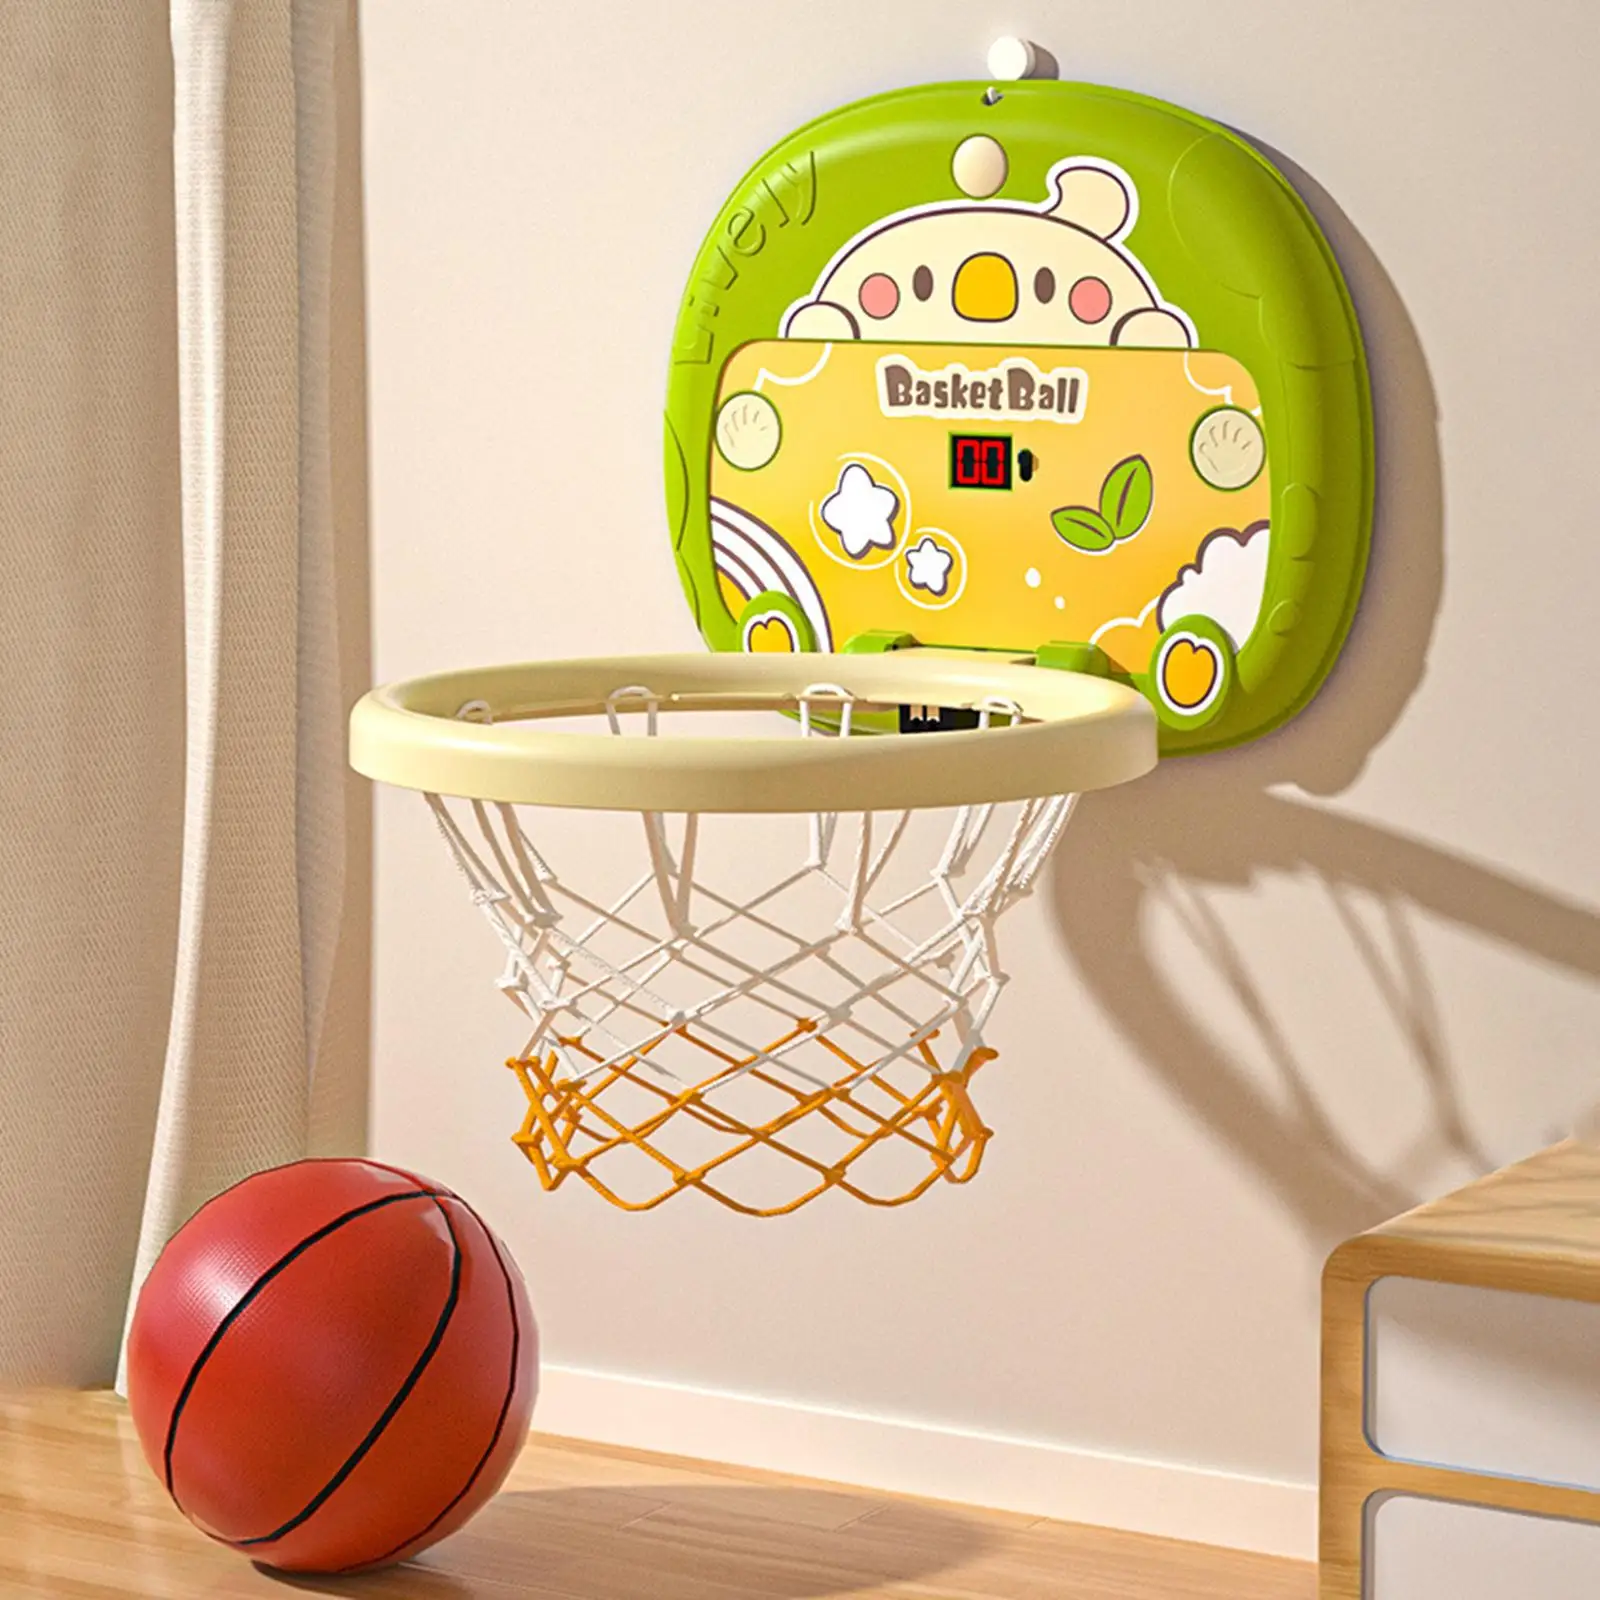 Mini Basketball Hoop Set Scoring Basketball Training Foldable Hanging Basketball Goal for Game Playing All Ages Children